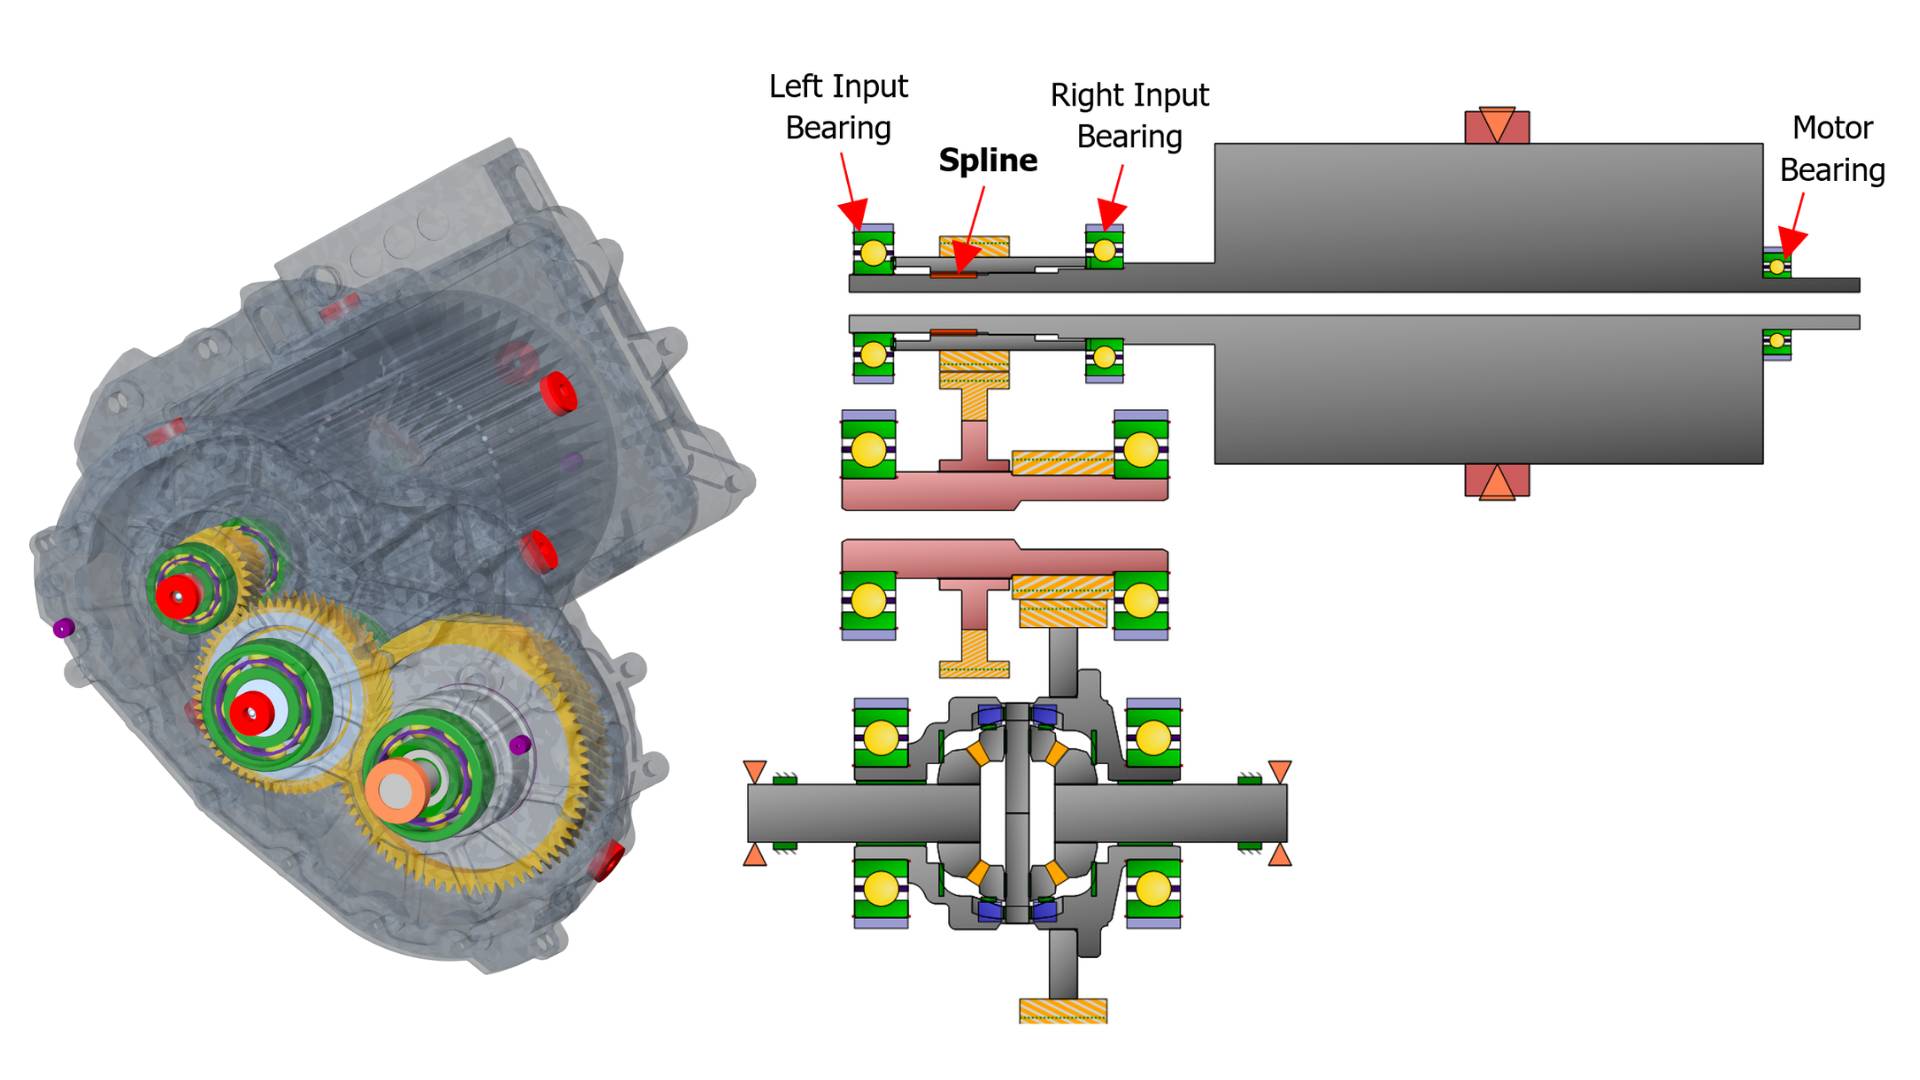 EV Powertrain with three bearing input assembly (rotor + transmission input shaft) layout.